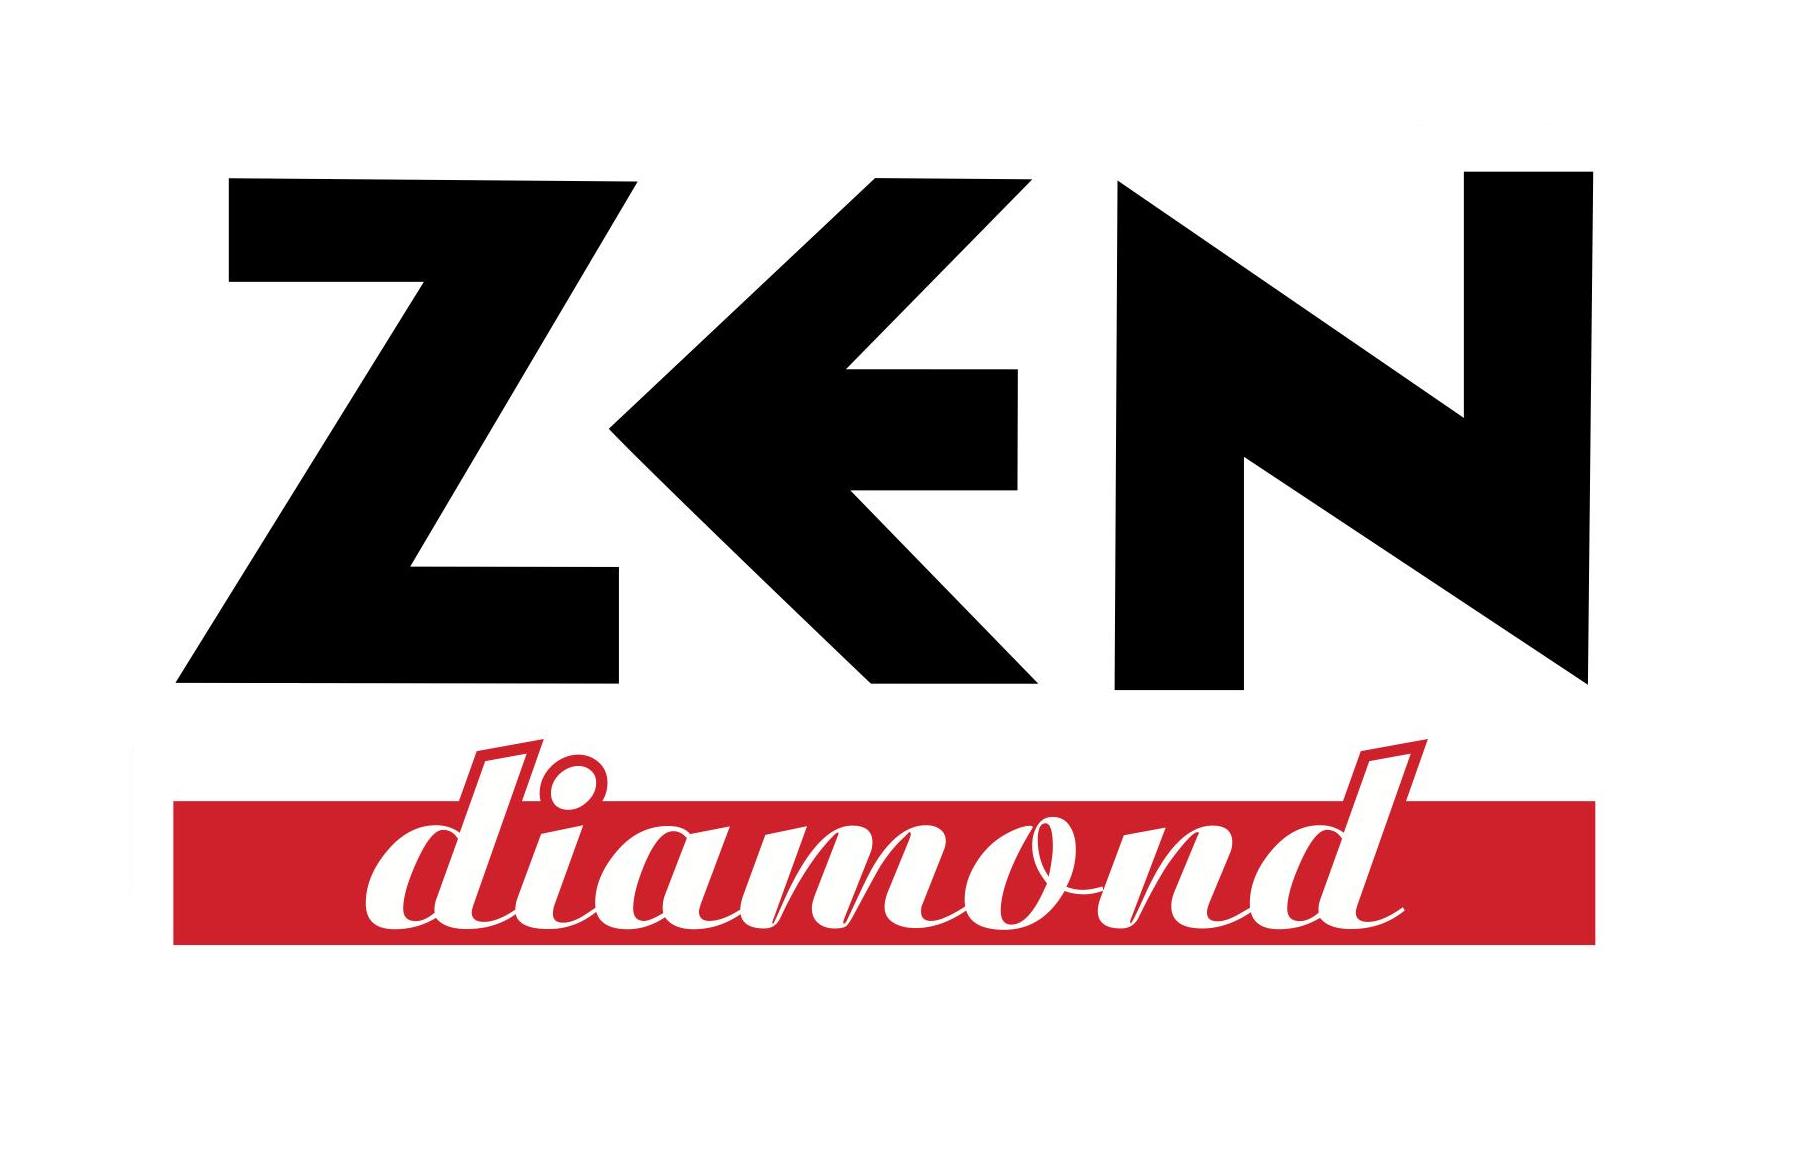 Энд зен. Zen Diamond logo. Дзен логотип вектор. Zen Pirlanta. Таки логотип.